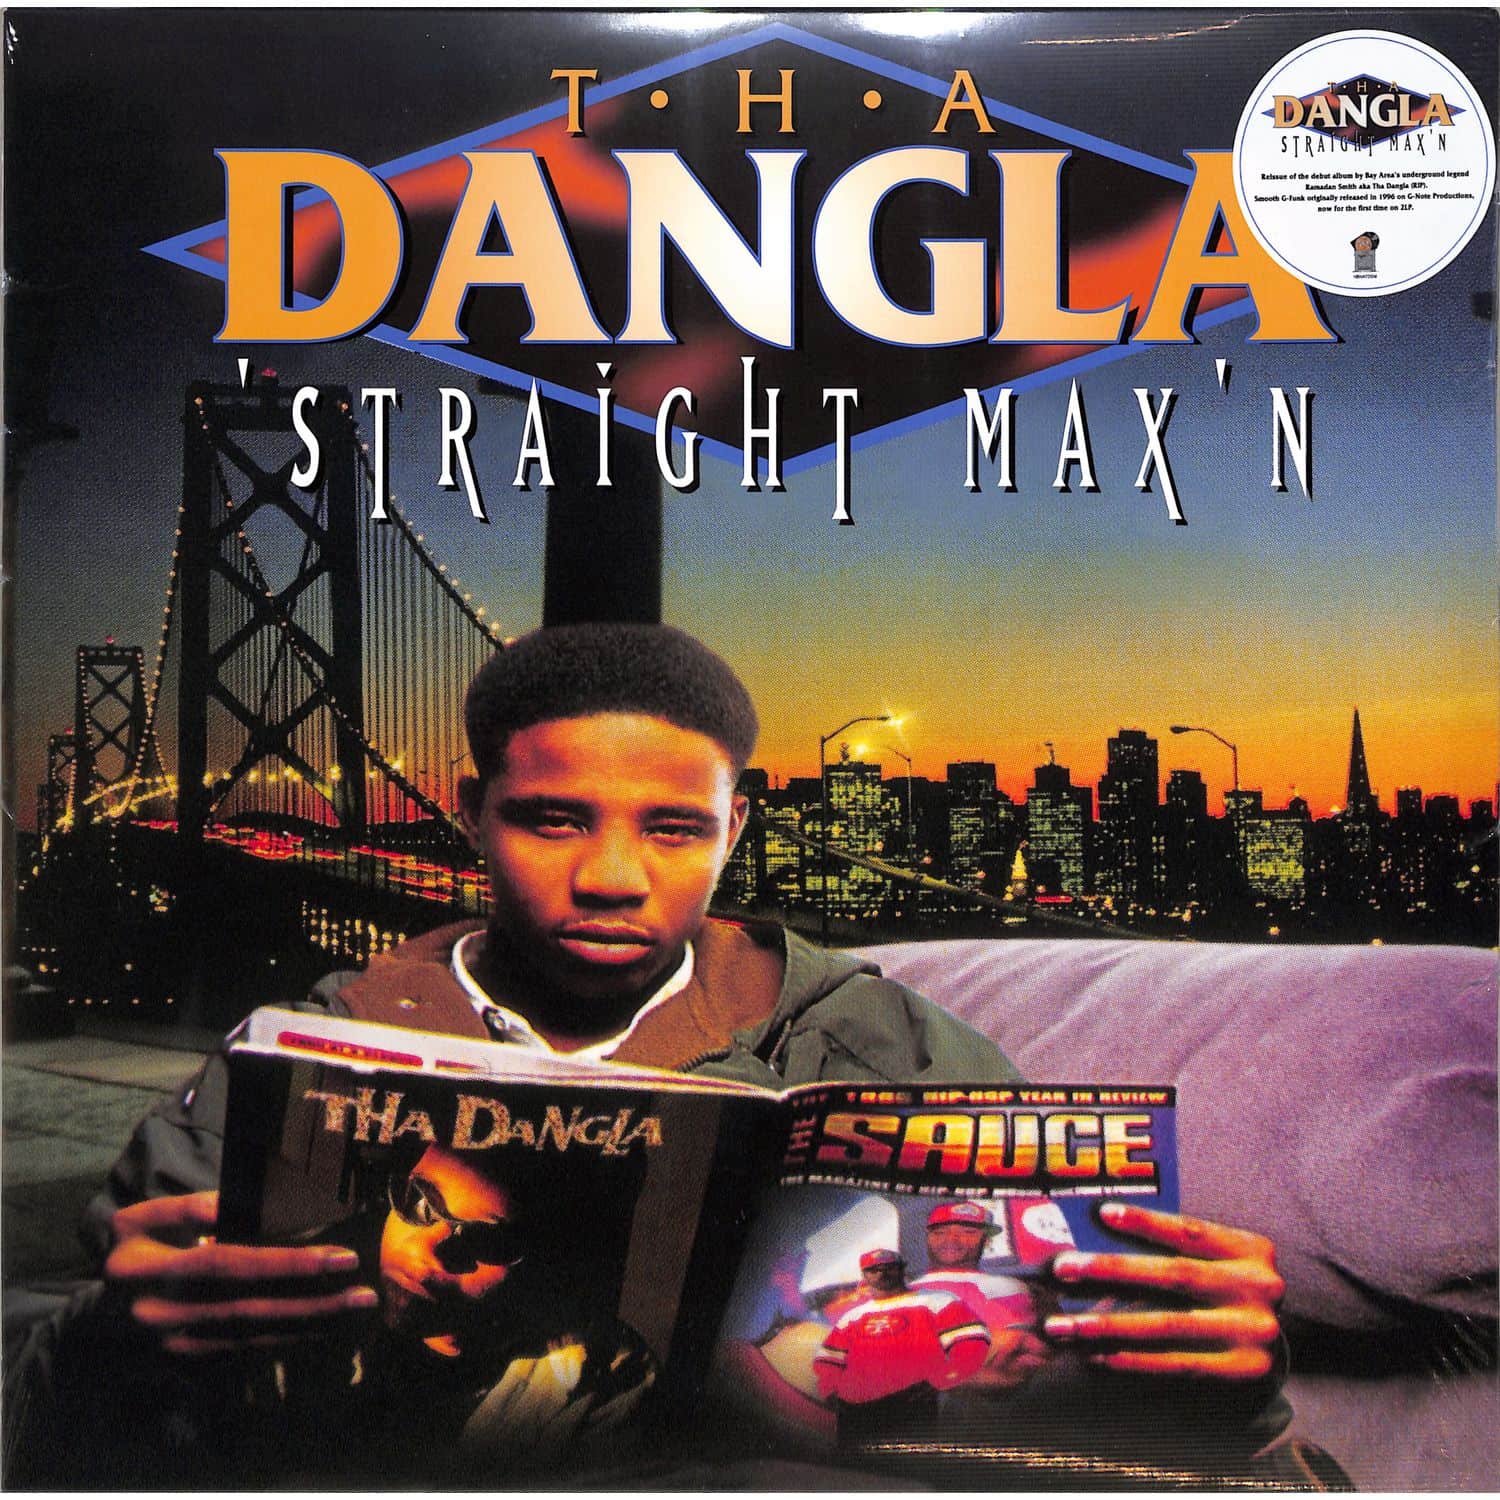 Tha Dangla - STRAIGHT MAX N 